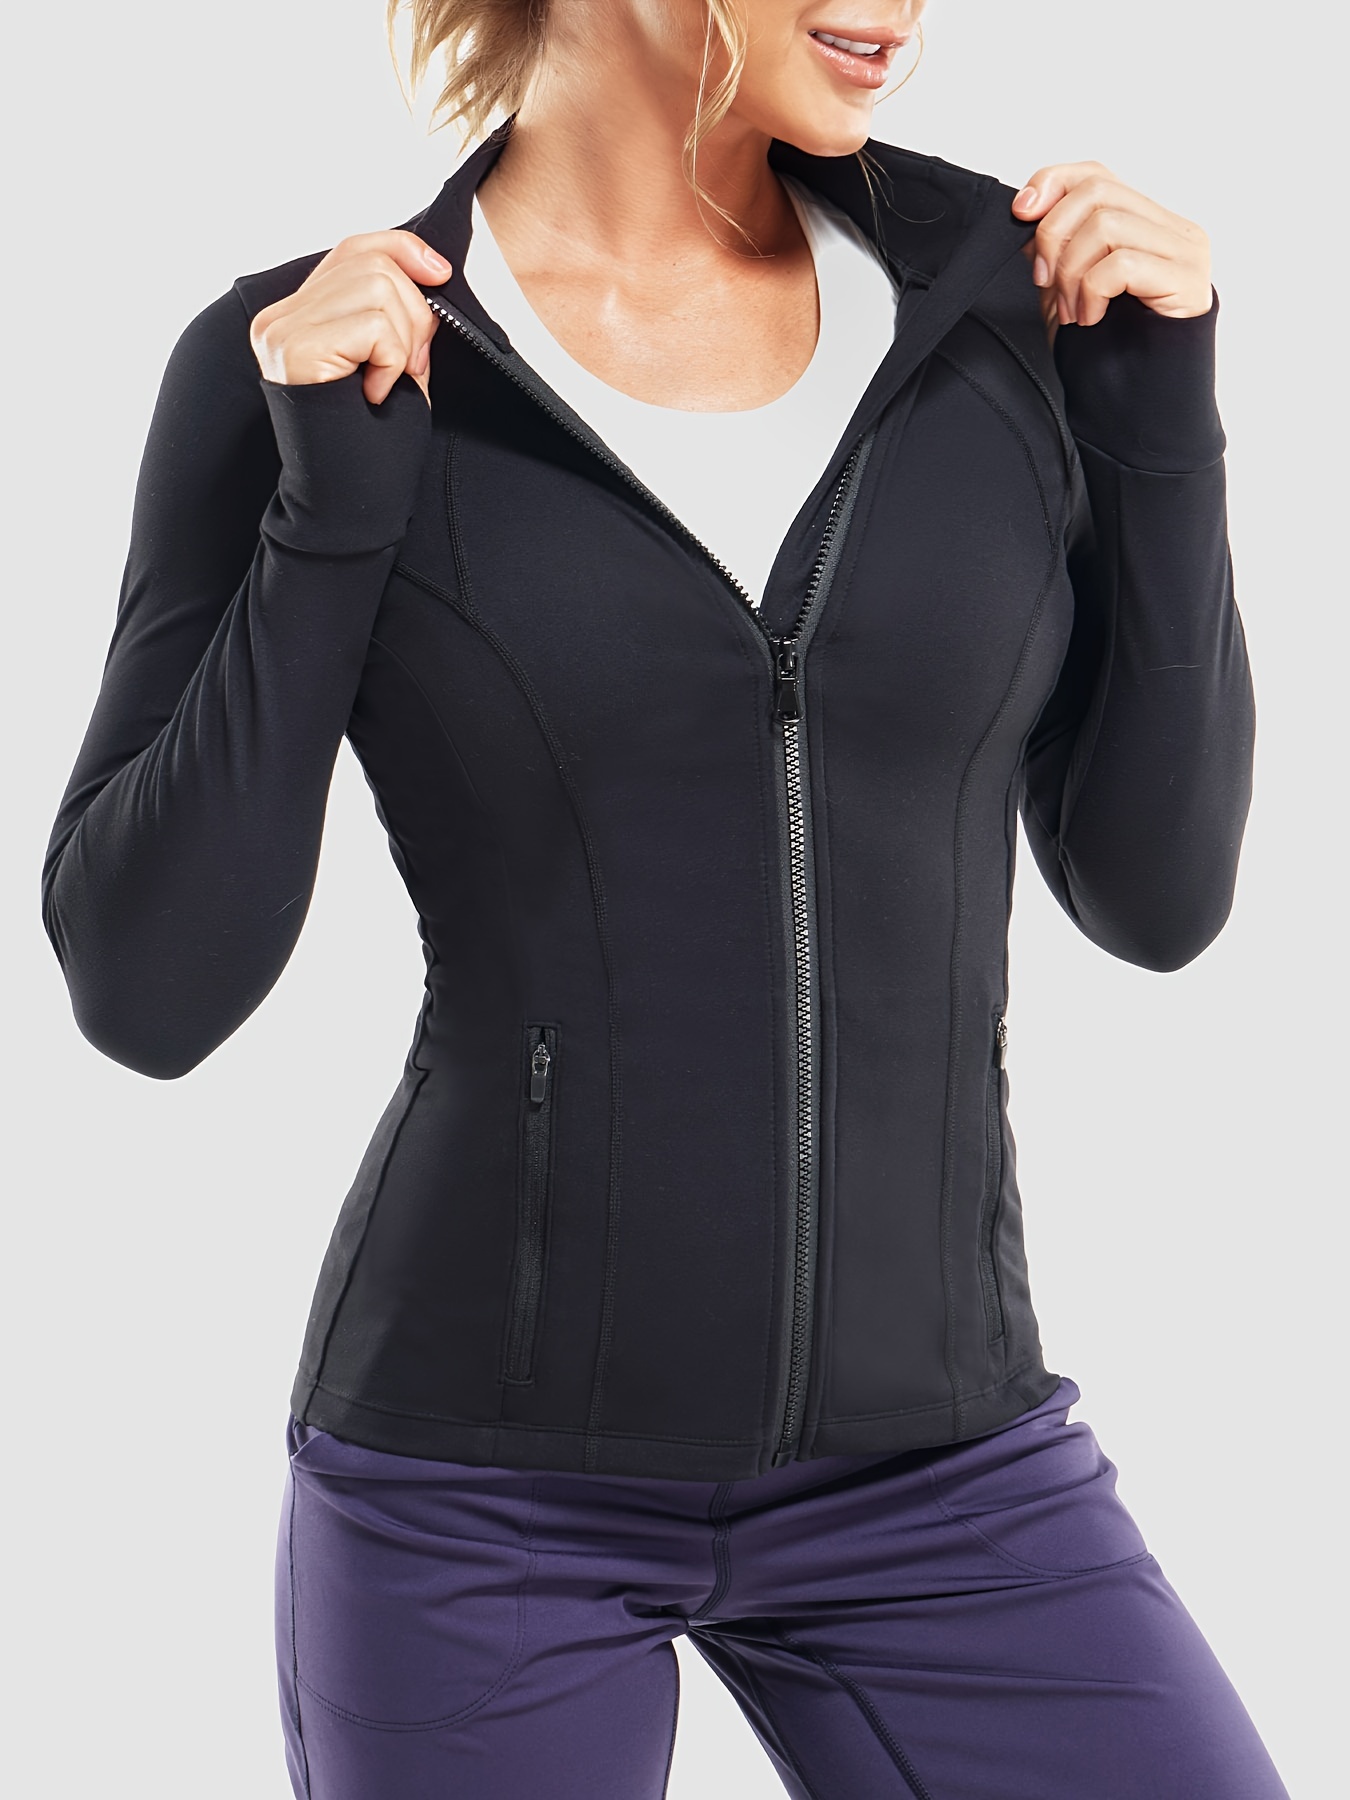 Women's Full Zip Seamless Workout Jacket, Bbl Jacket For Women